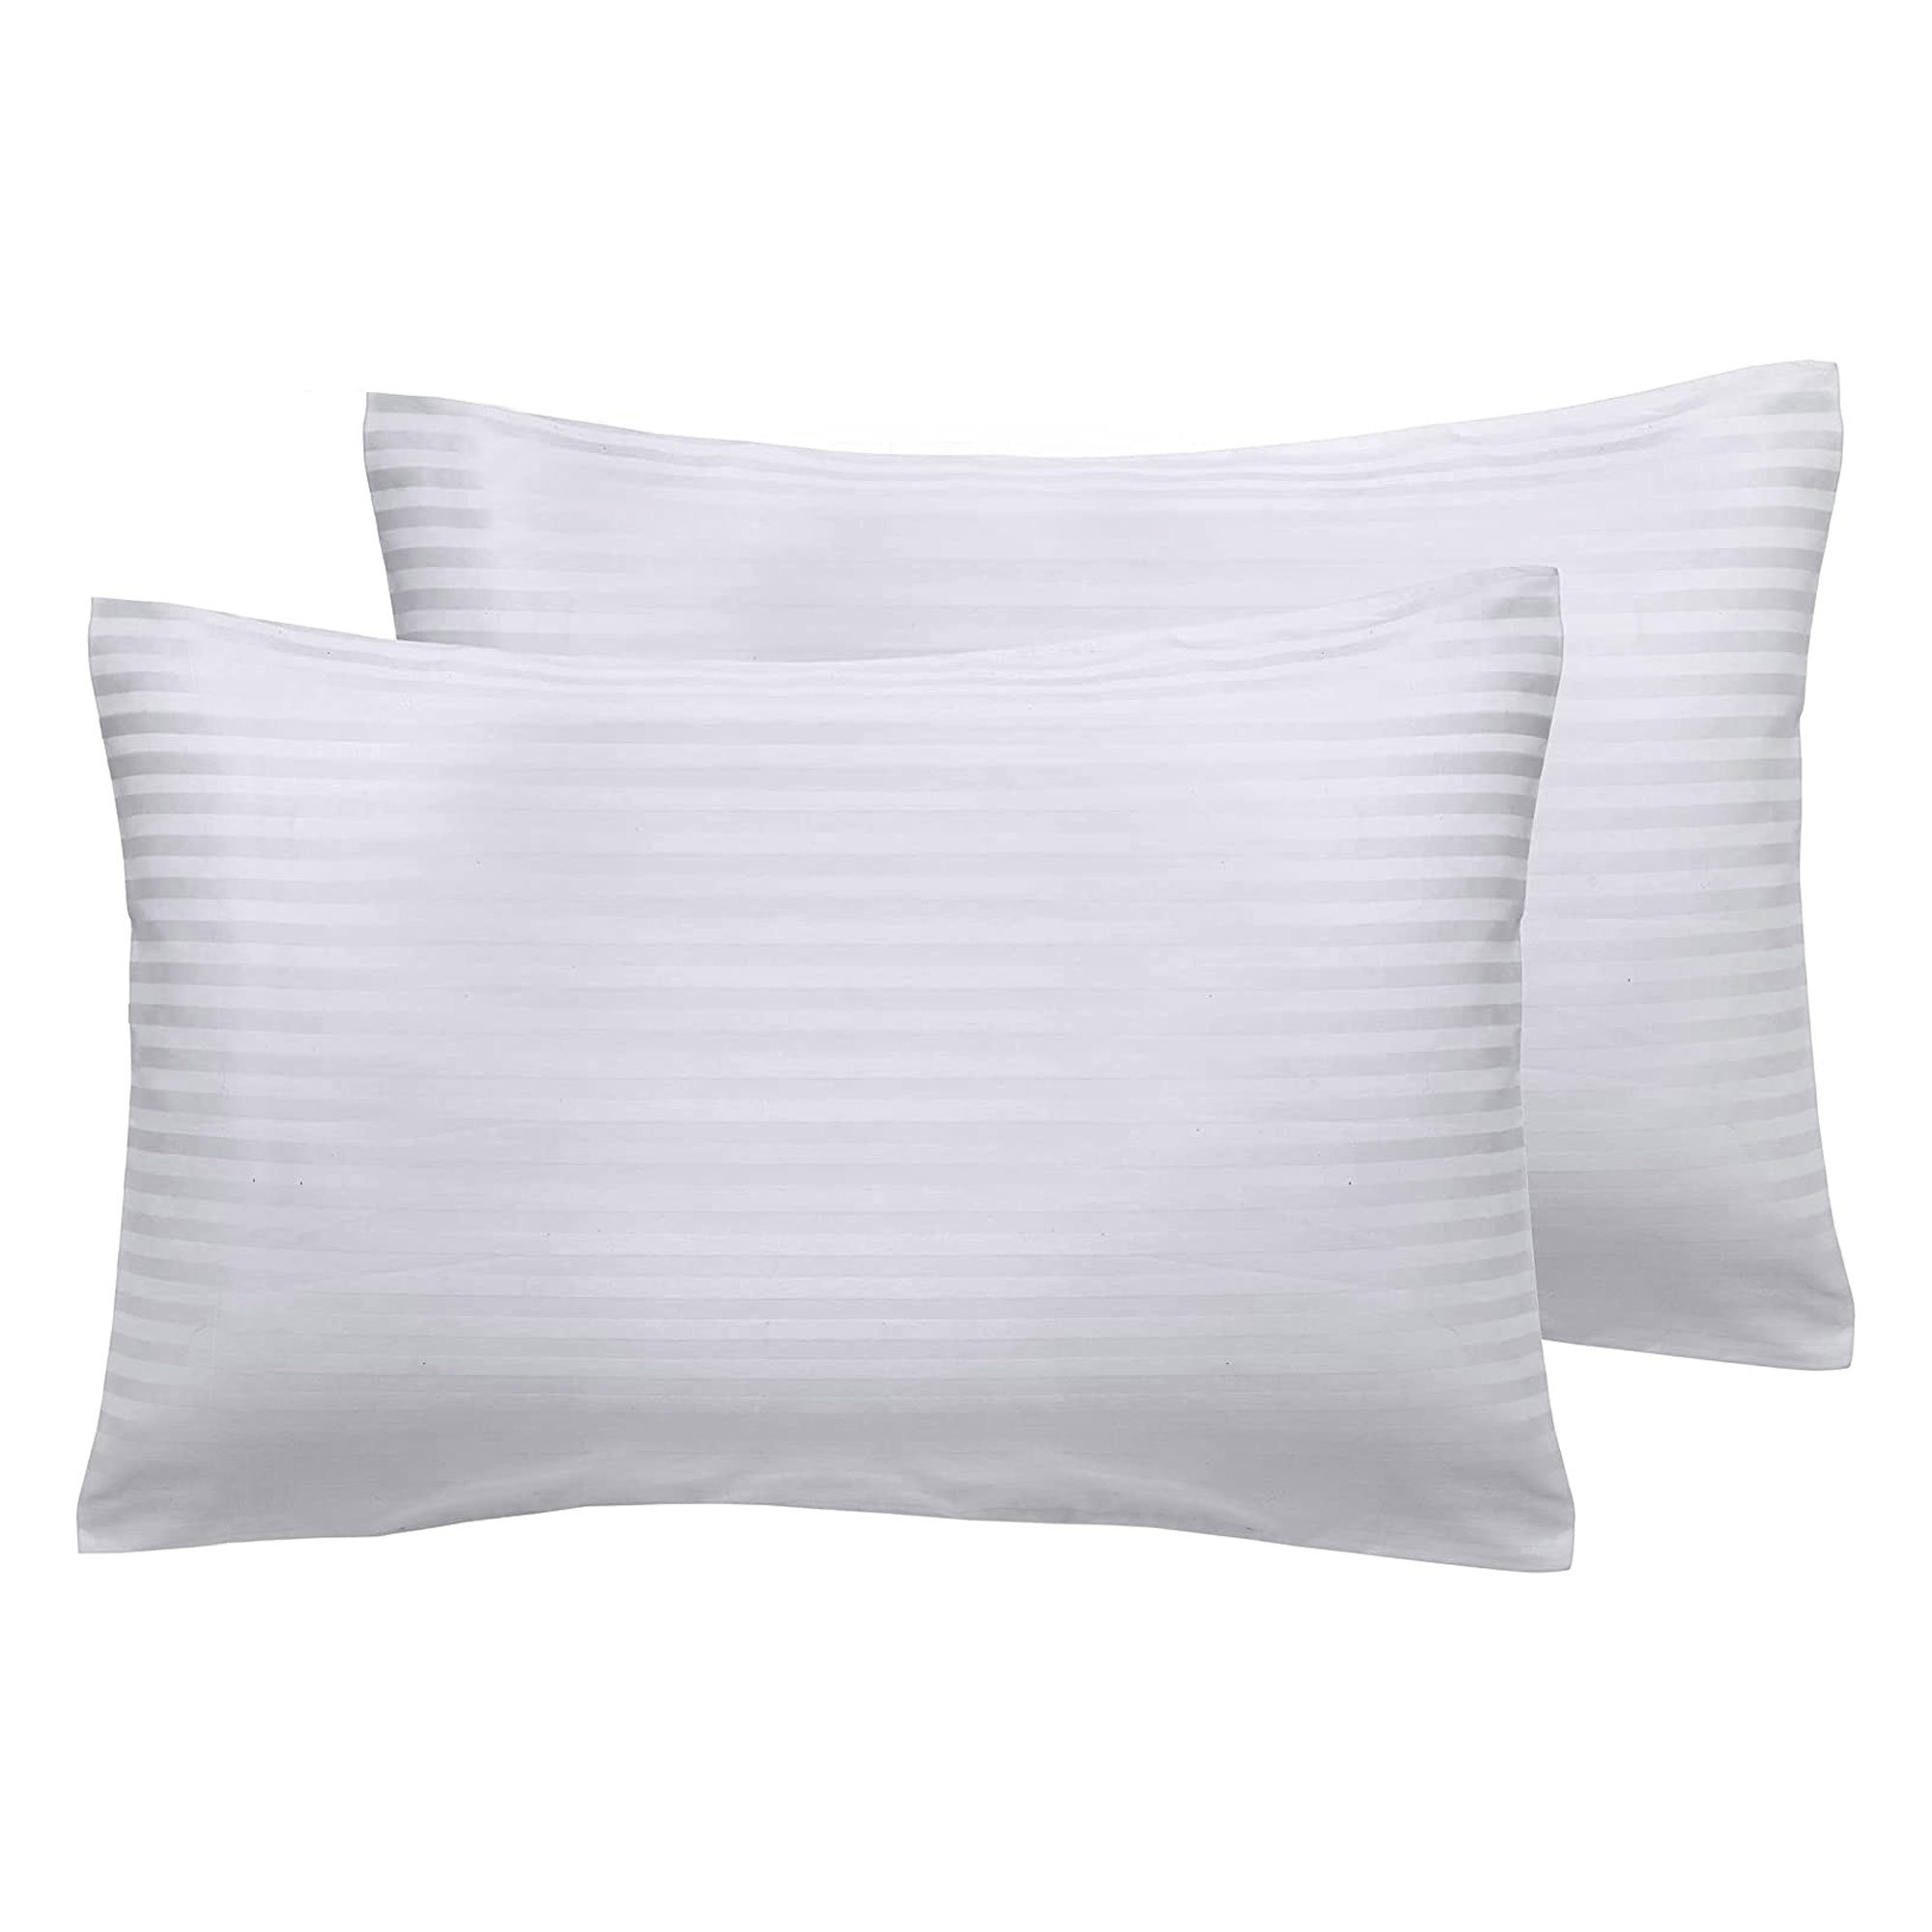 Mercana | 18 x 18 Non-Allergen Pillow Insert White